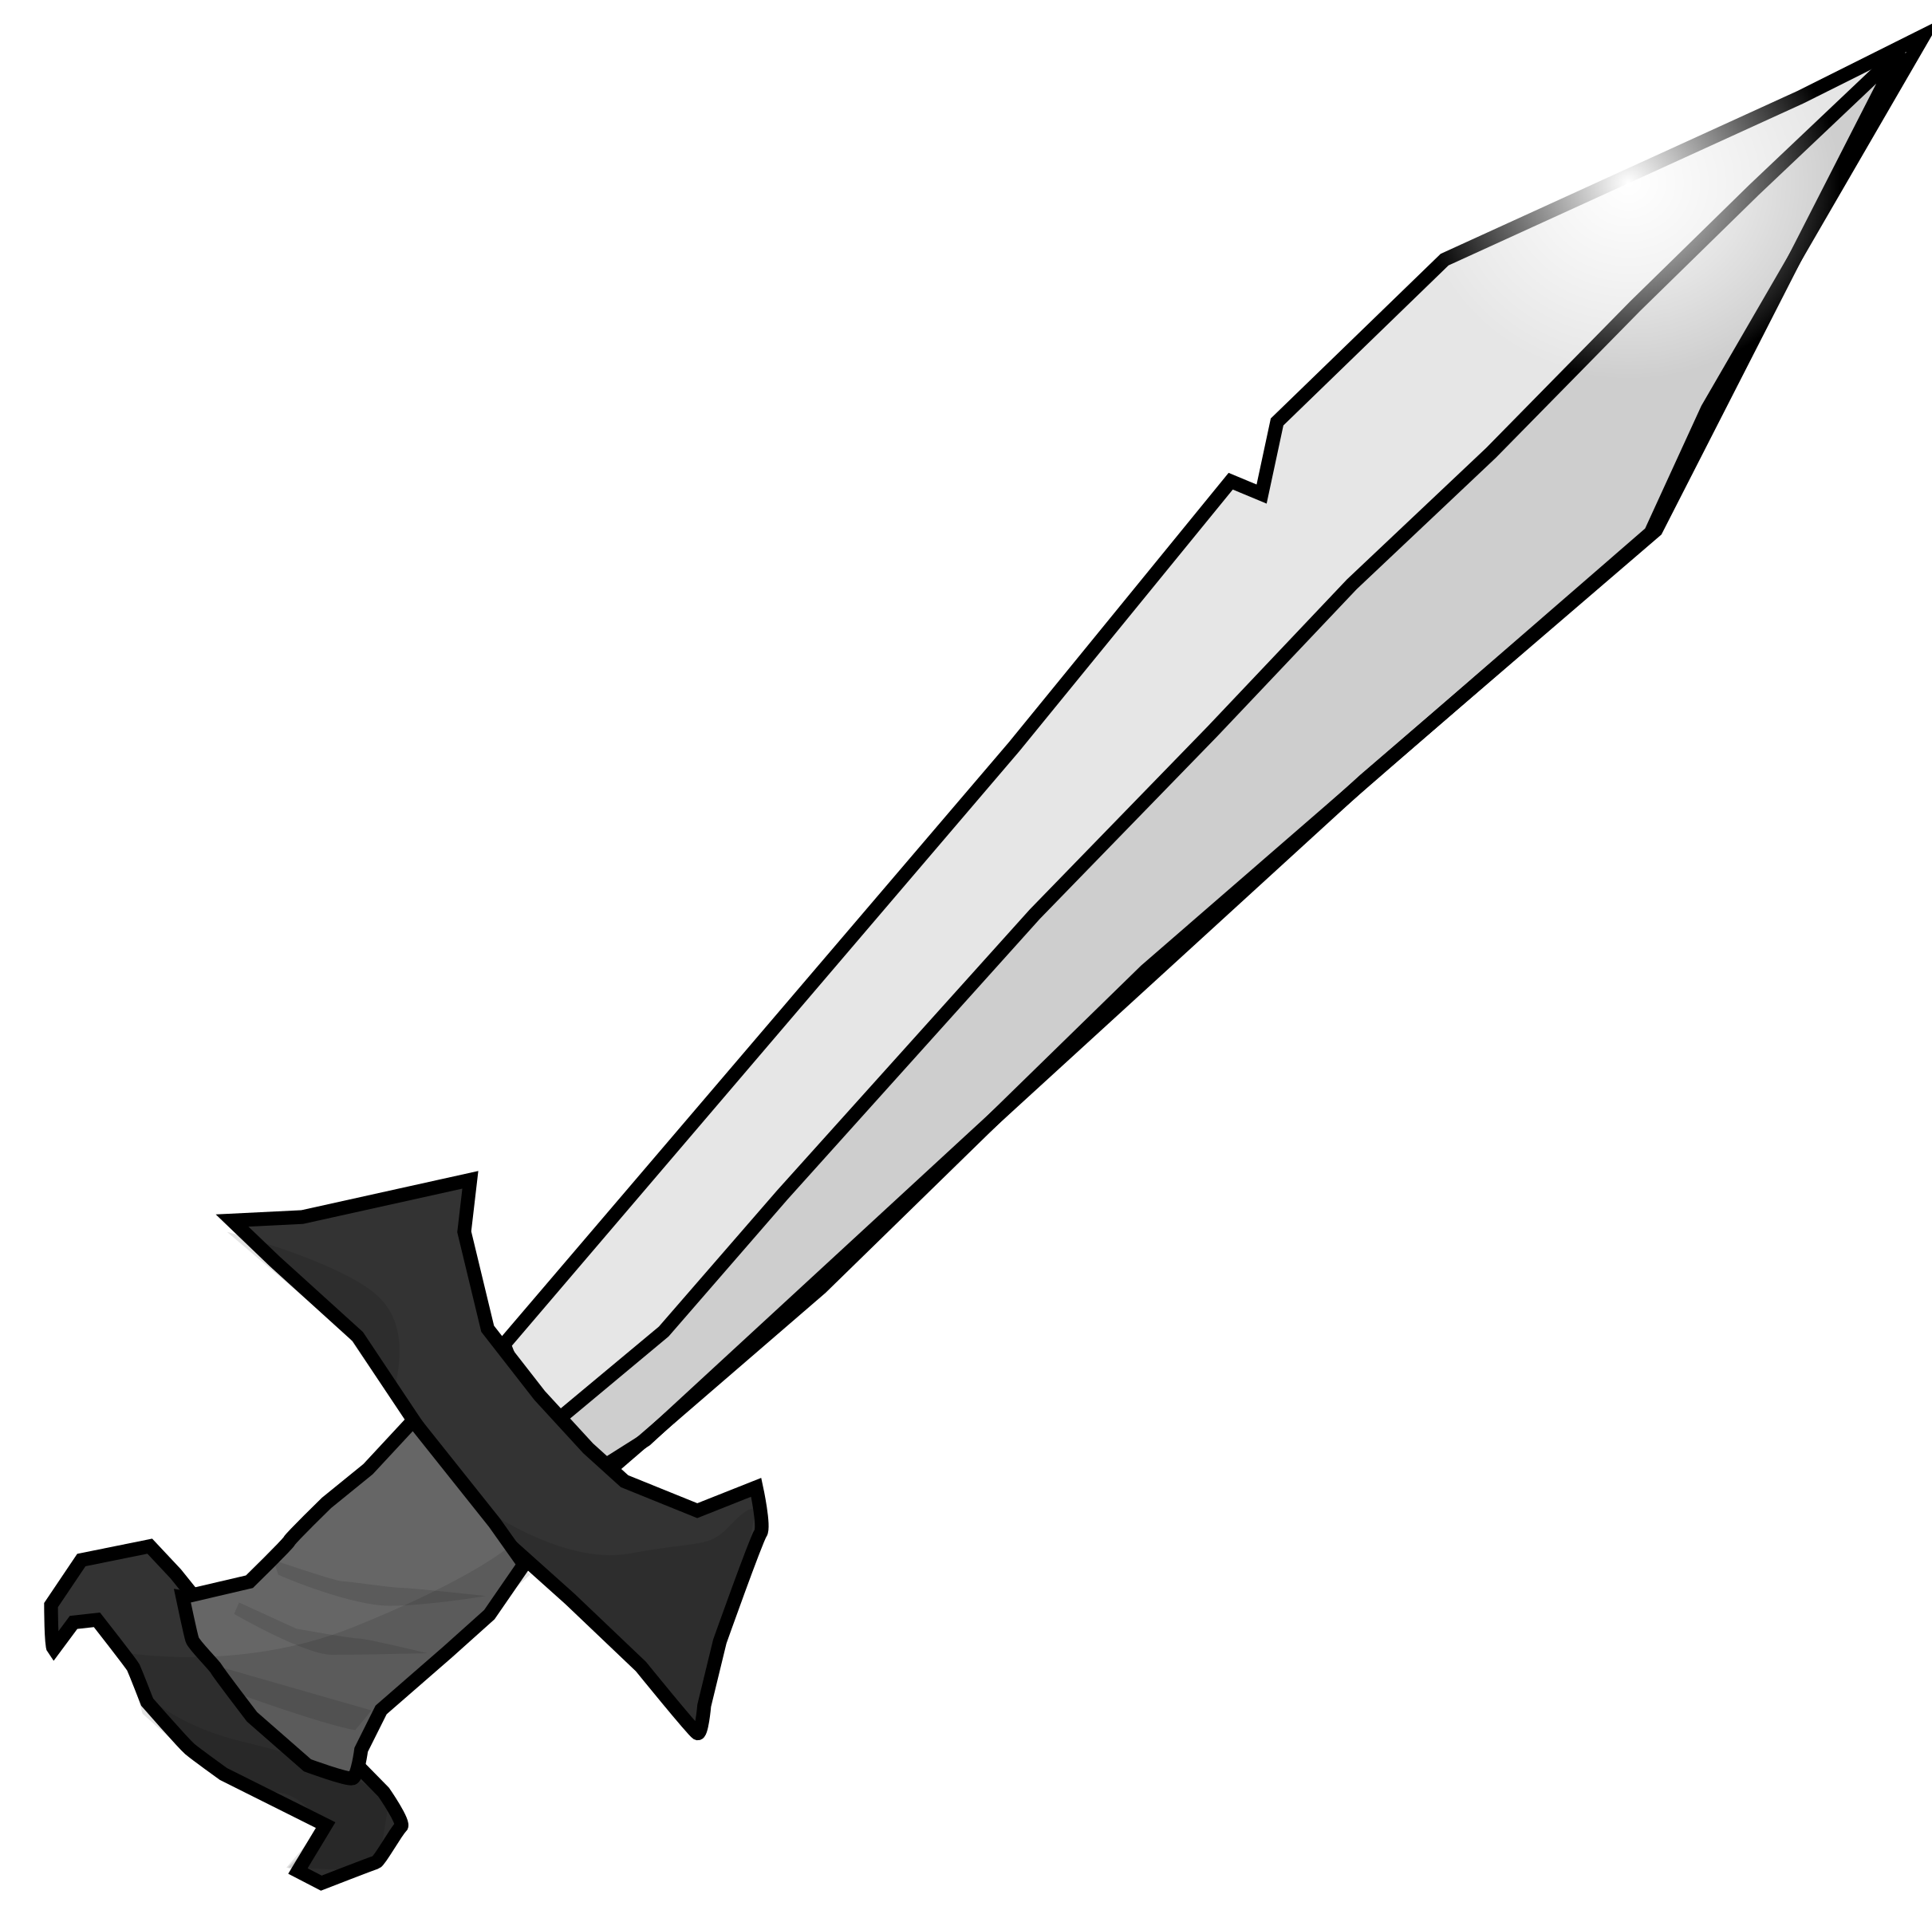 Sword clipart #9, Download drawings